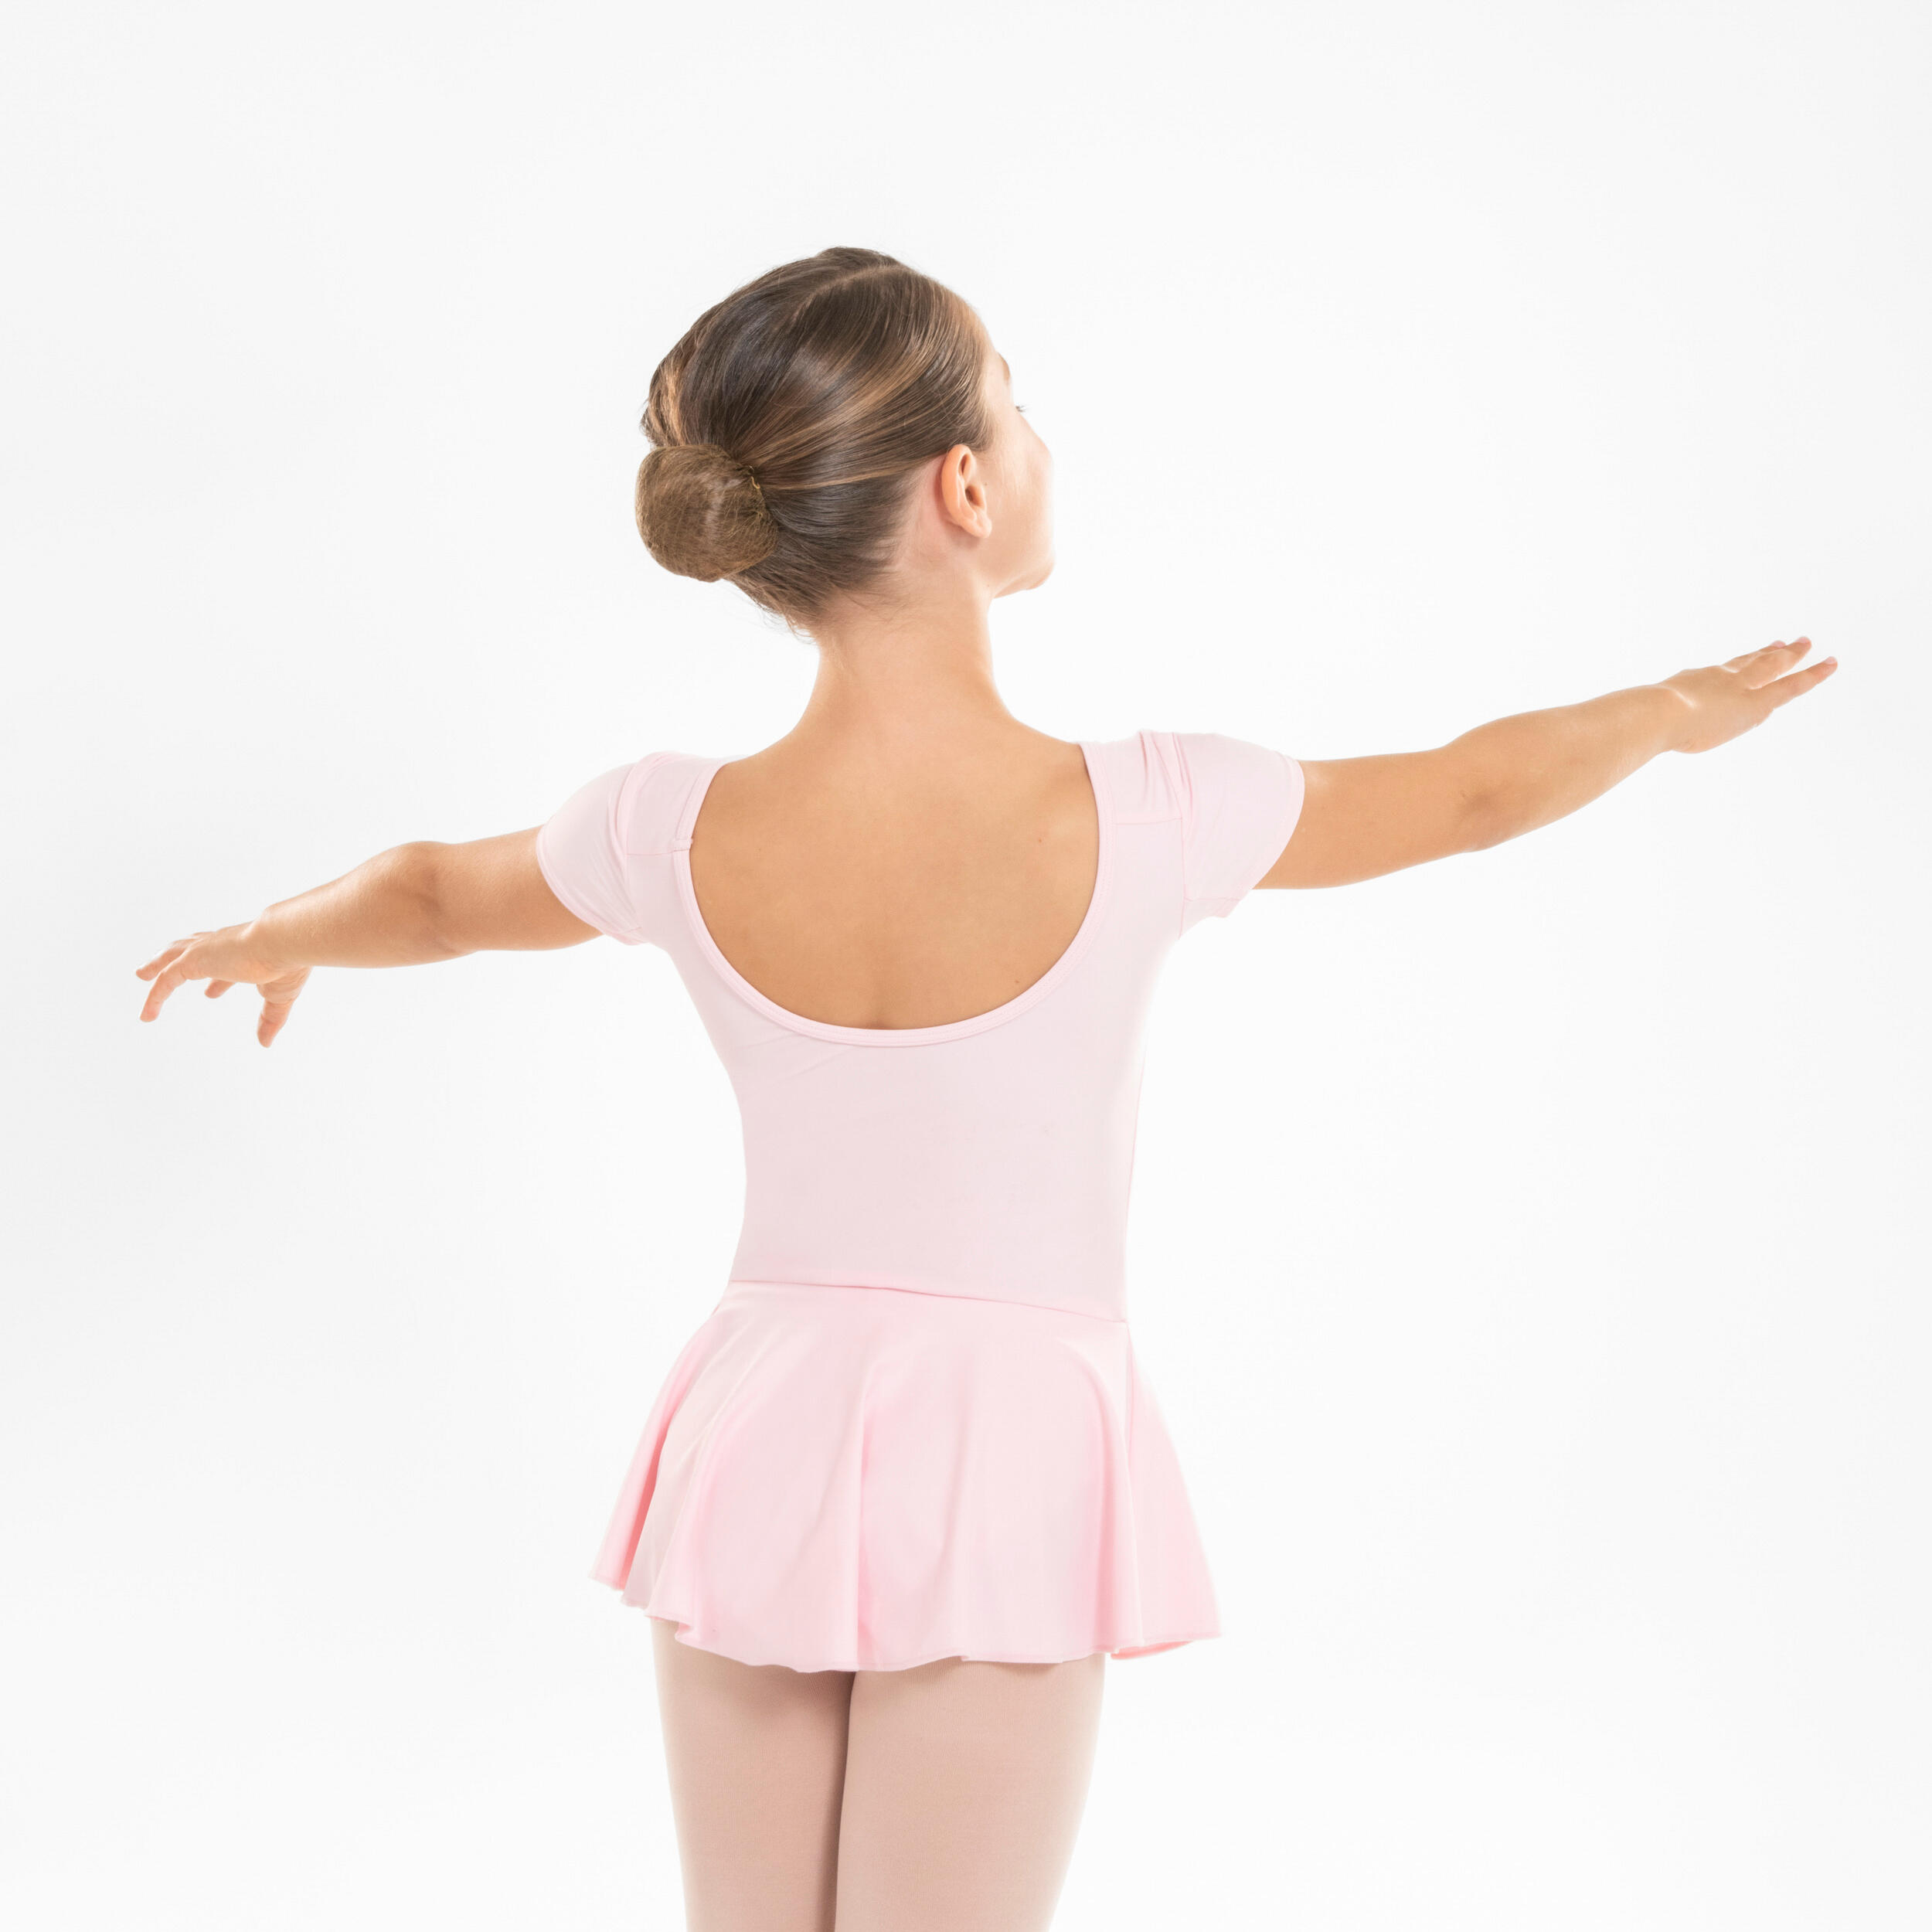 Footless ballet tights - Girls - Quartz pink - Starever - Decathlon